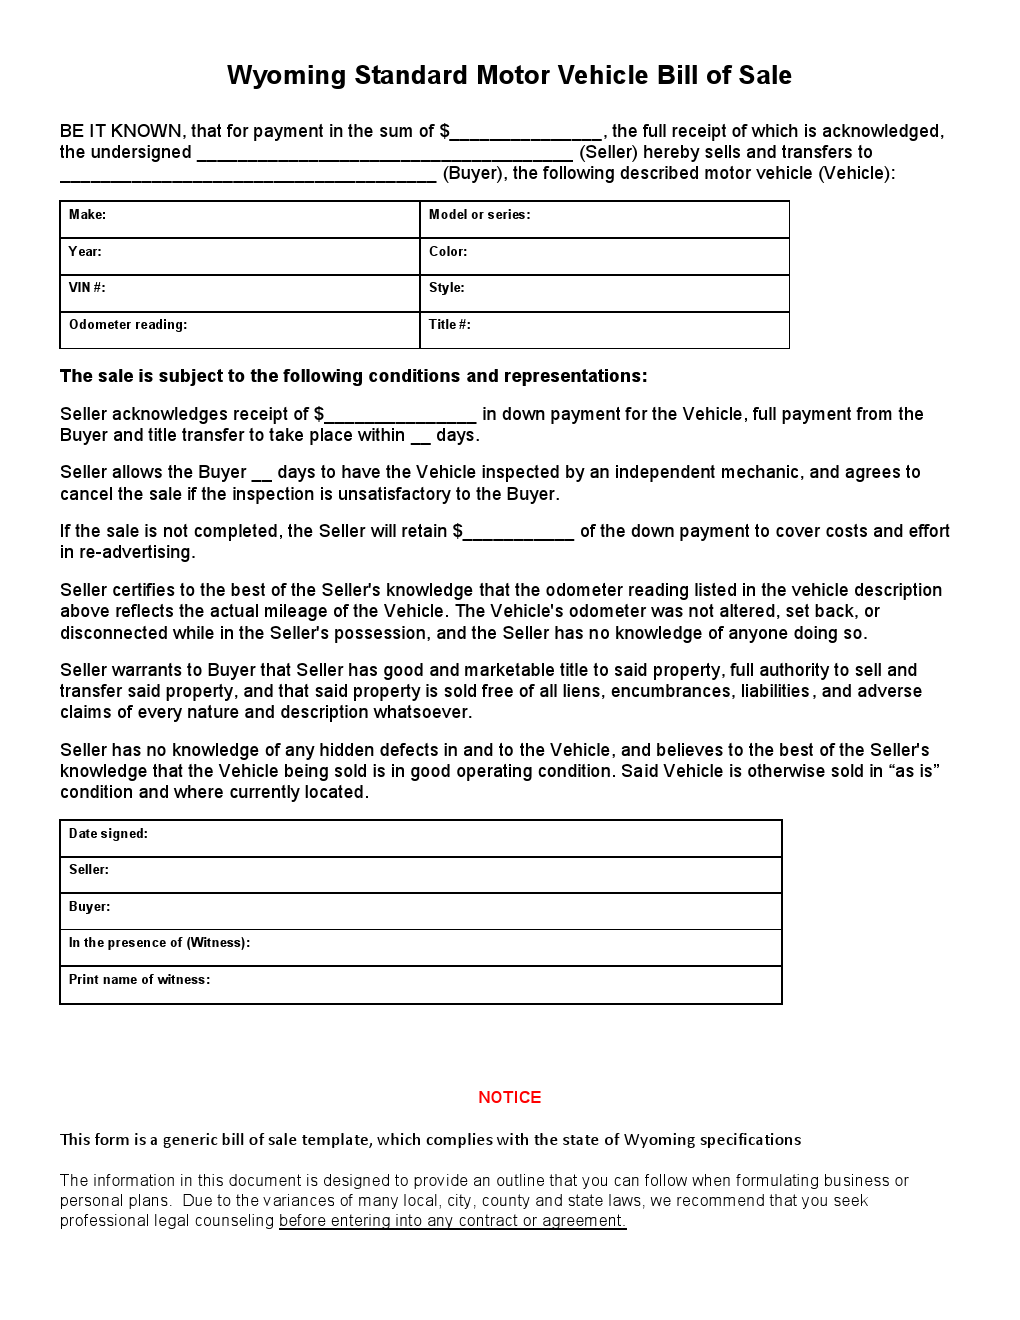 Free Wyoming Standard Motor Vehicle Bill of Sale Form - Download PDF | Word